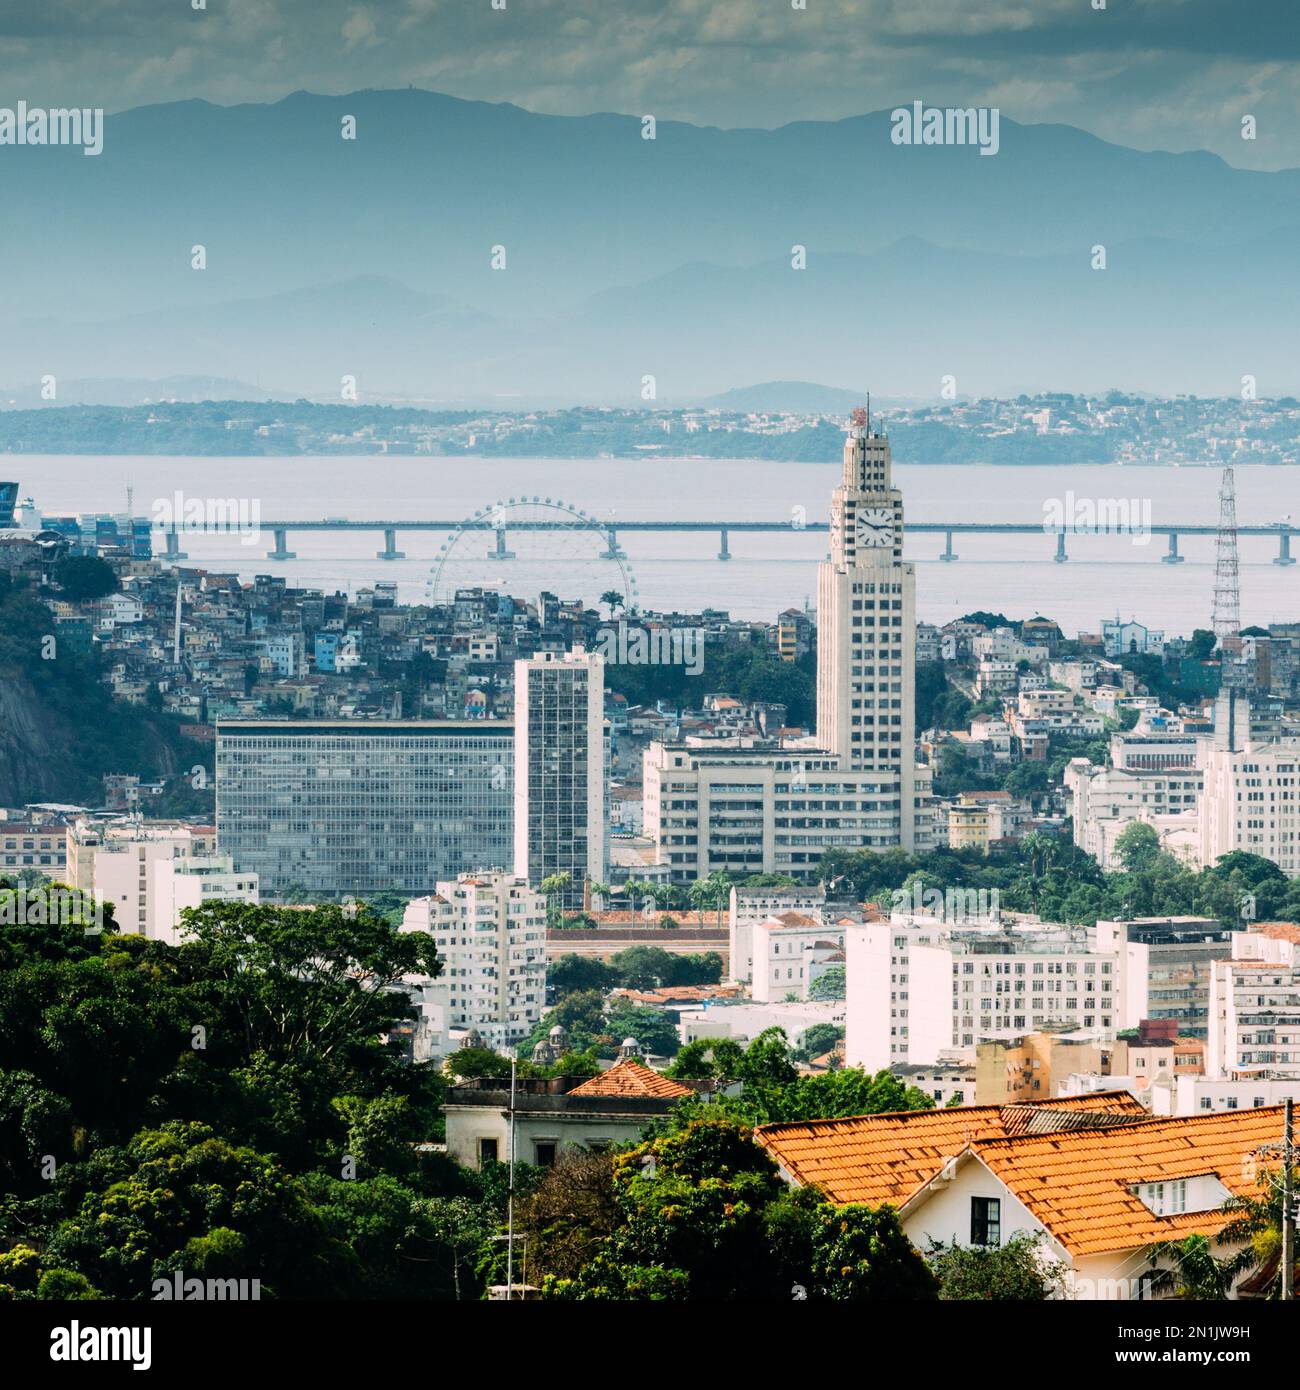 High perspective view of Downtown Rio de Janeiro, Brazil Stock Photo